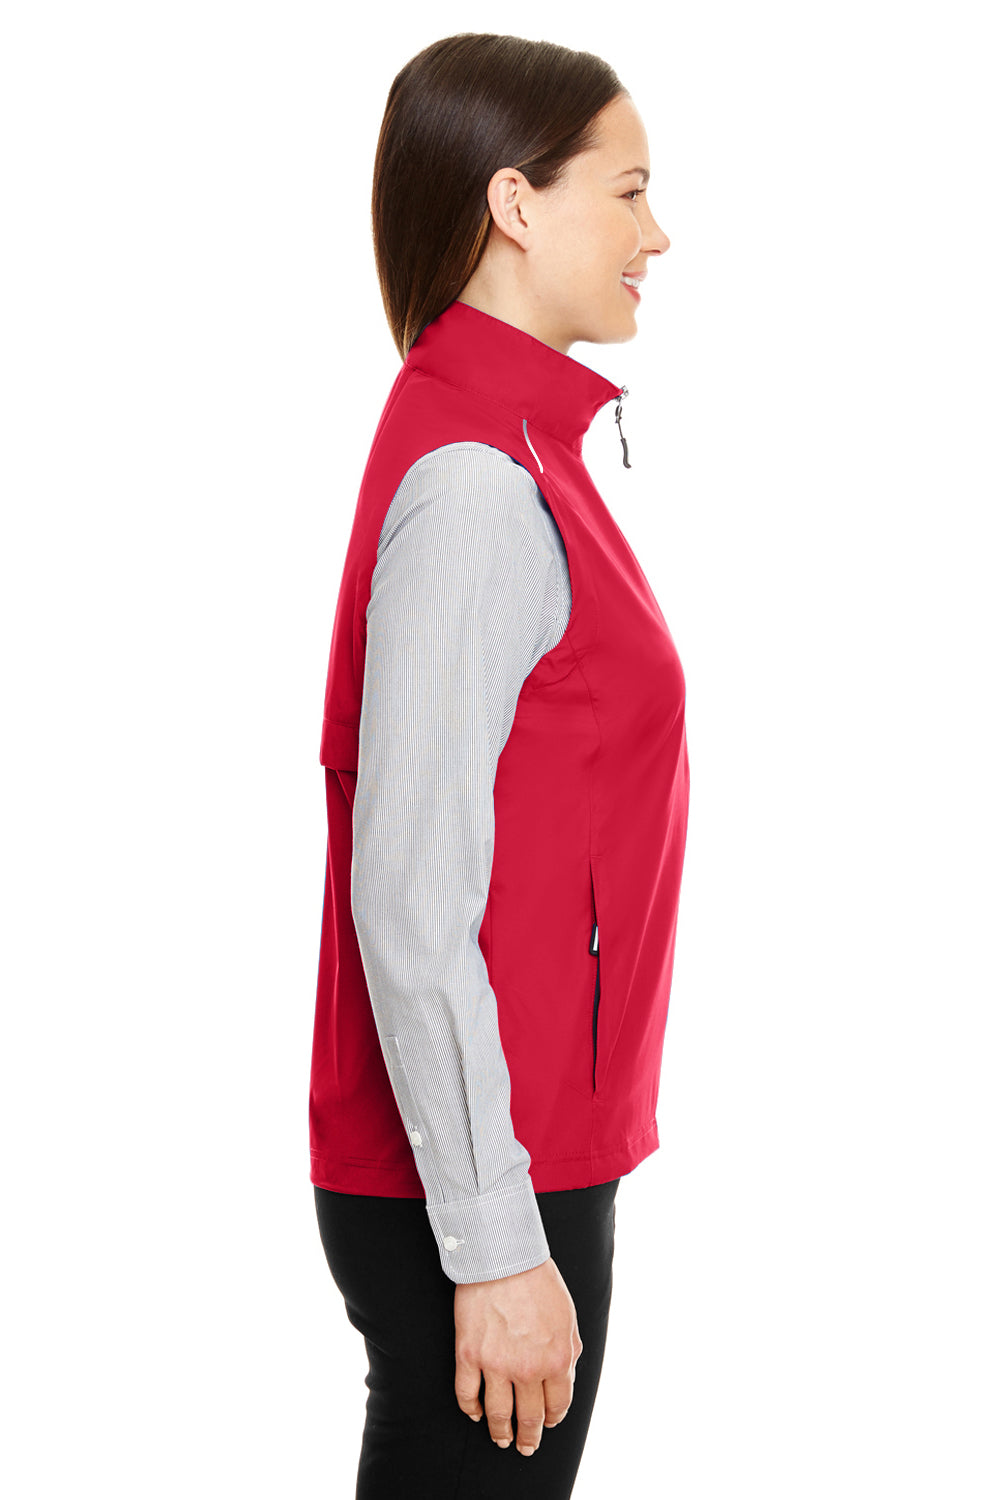 Core 365 CE703W Womens Techno Lite Water Resistant Full Zip Vest Red Side